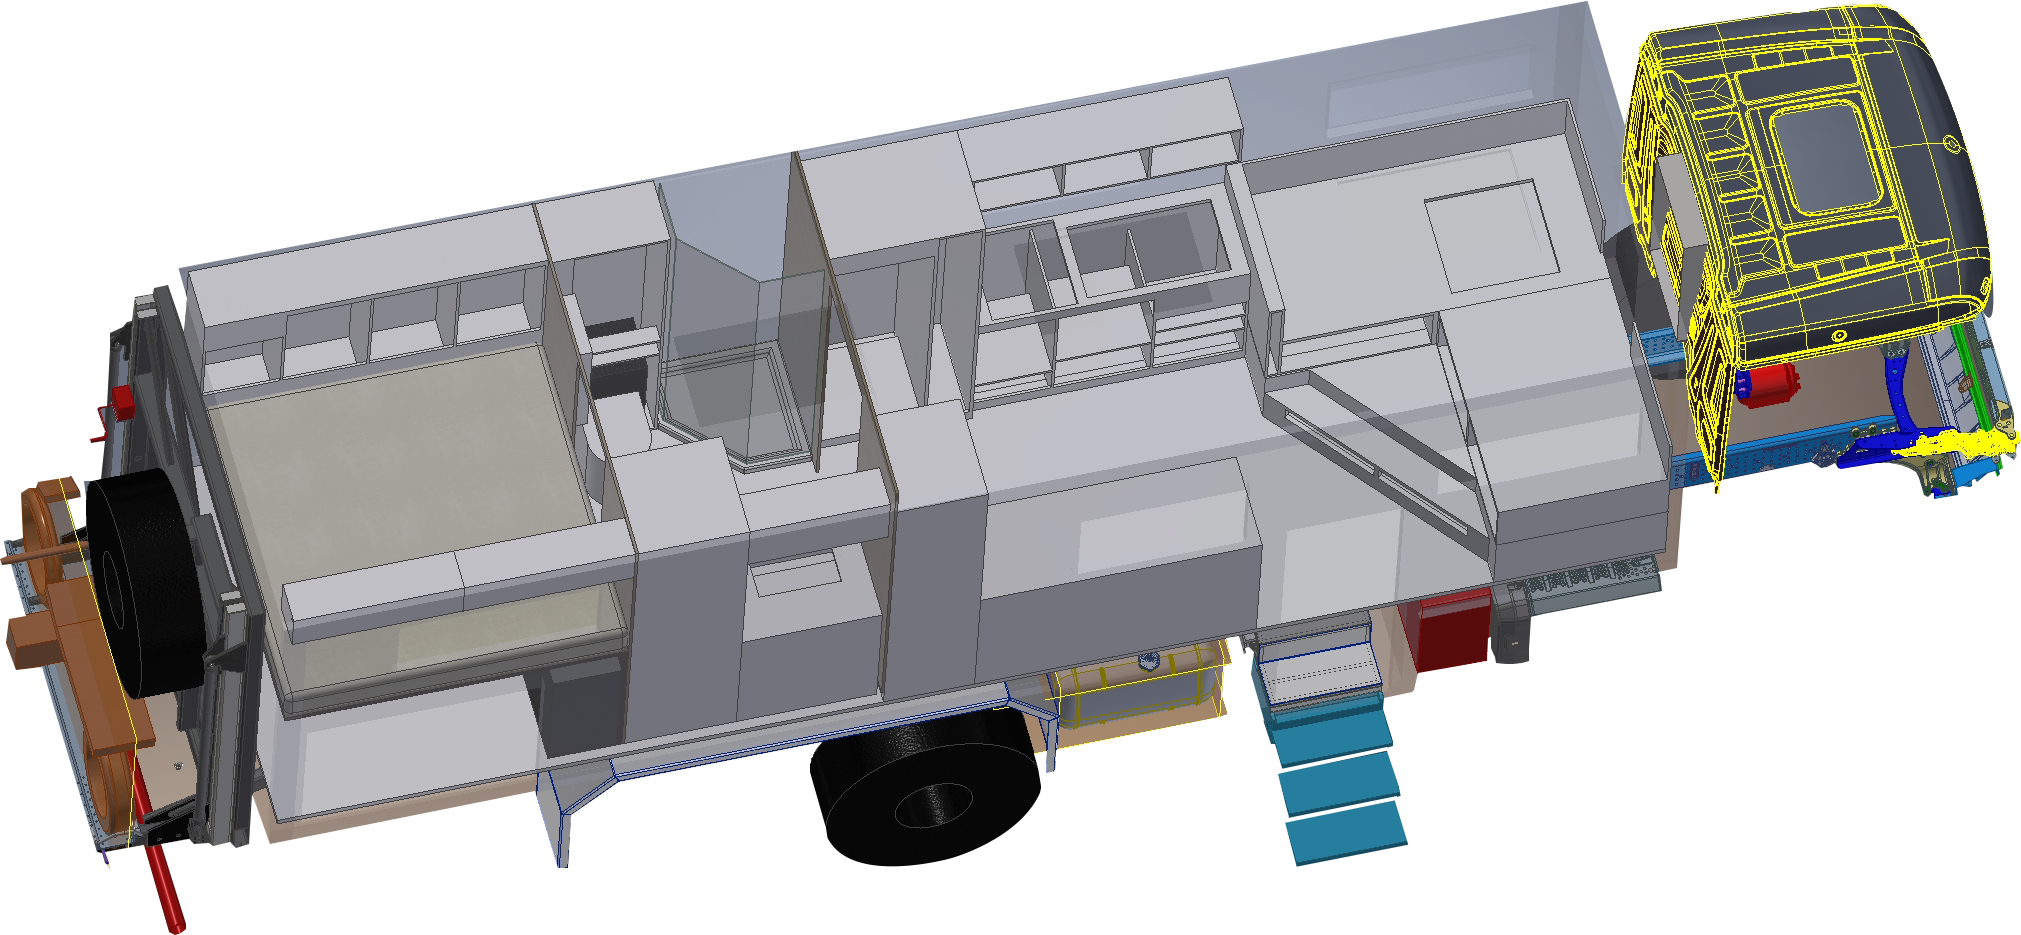 3d-Modell eines Expeditionsfahrzeuges